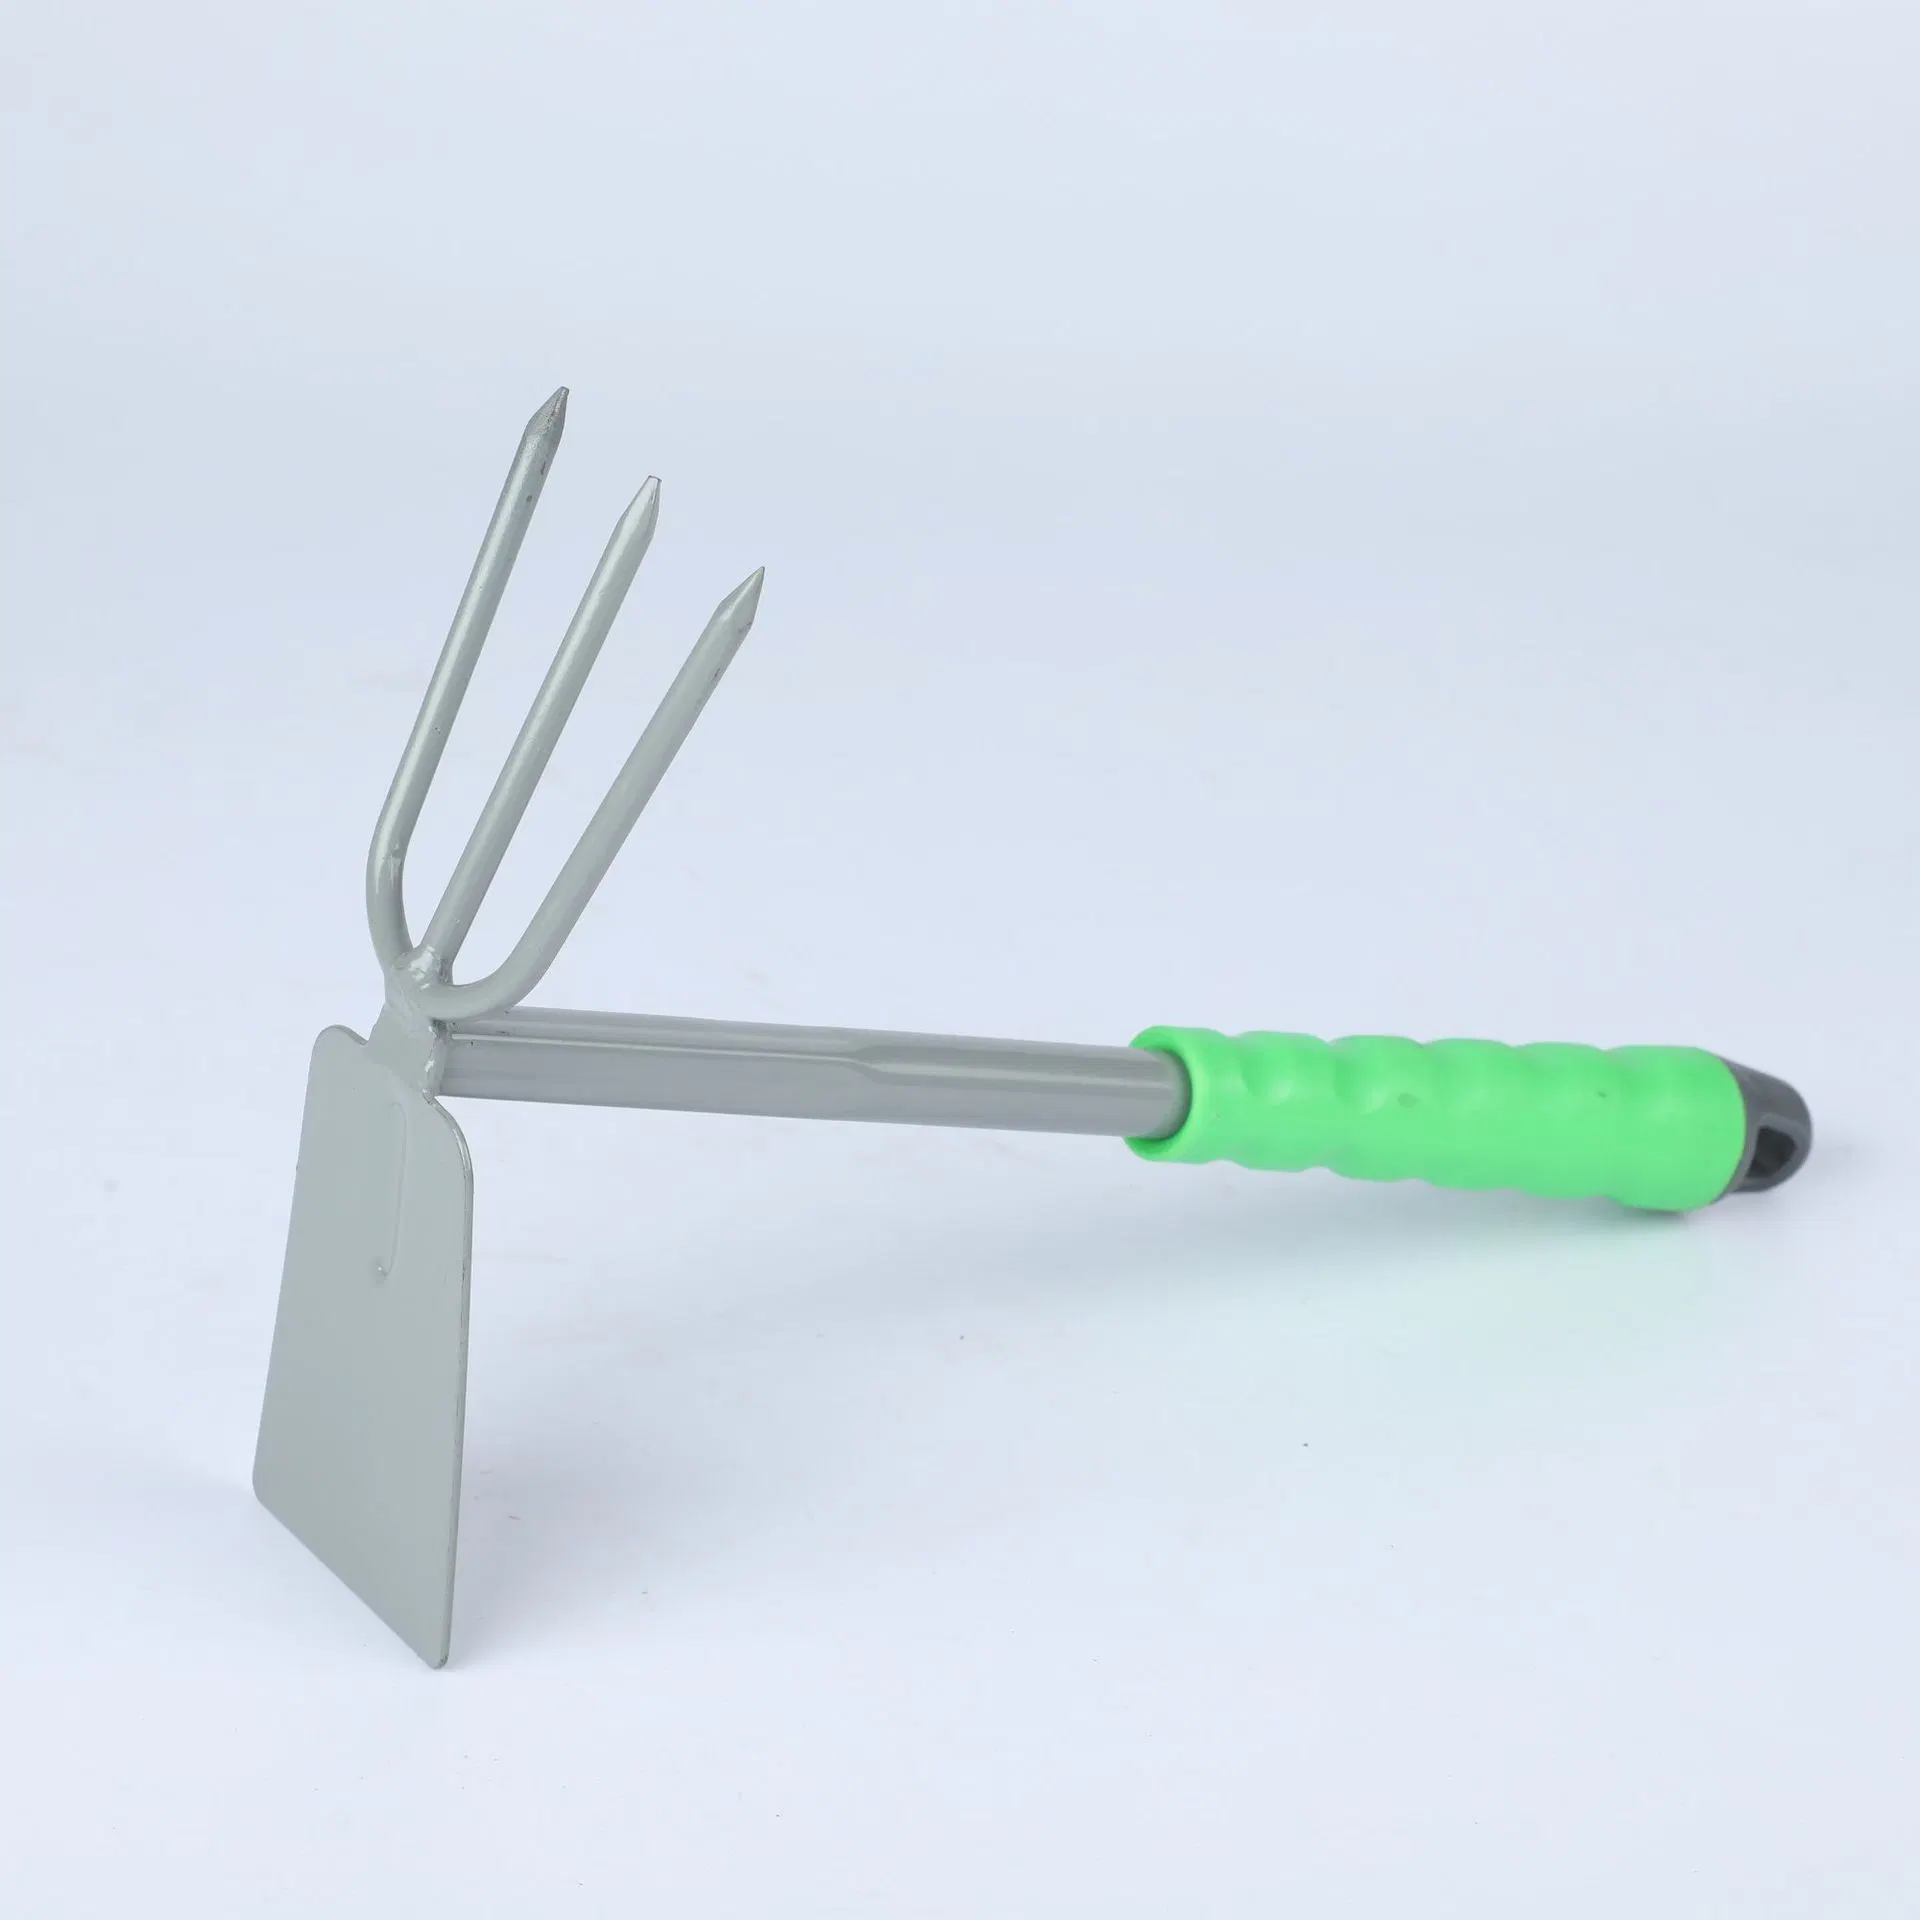 Cheap Plastic Handheld Garden Tool Trowel, Transplanter and Cultivator Set